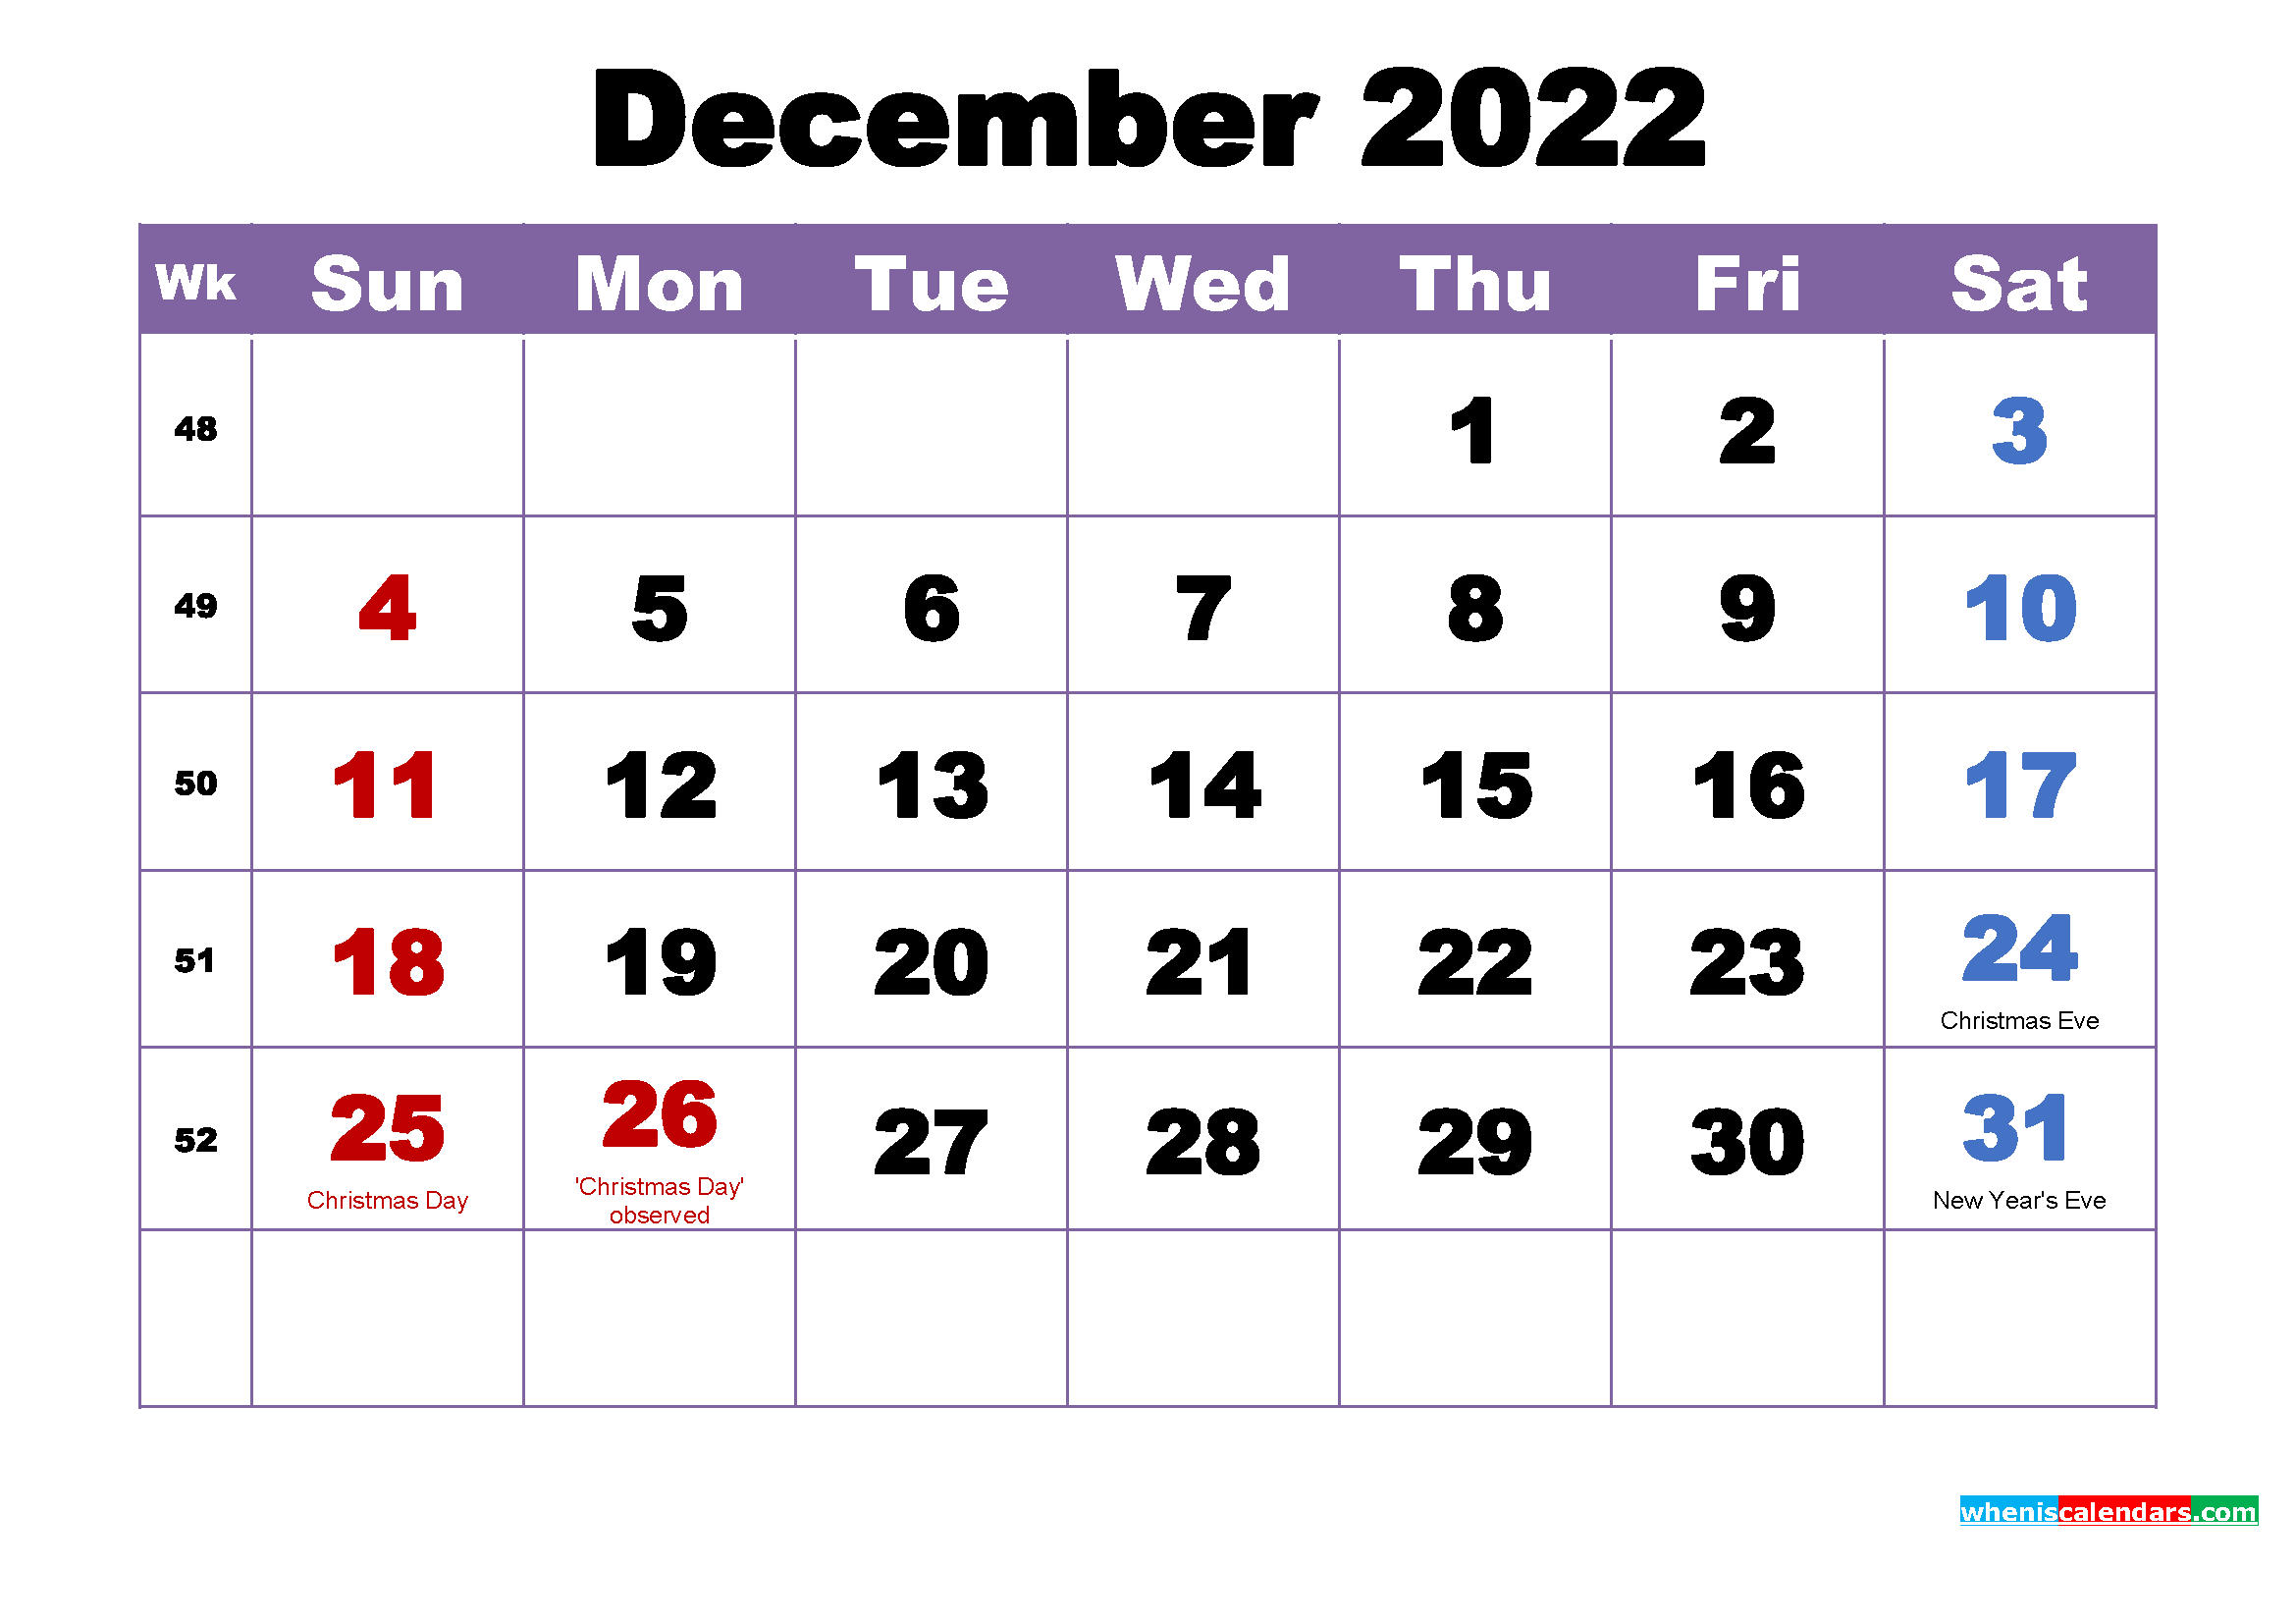 December 2022 Calendar Free December 2022 Calendar With Holidays Printable